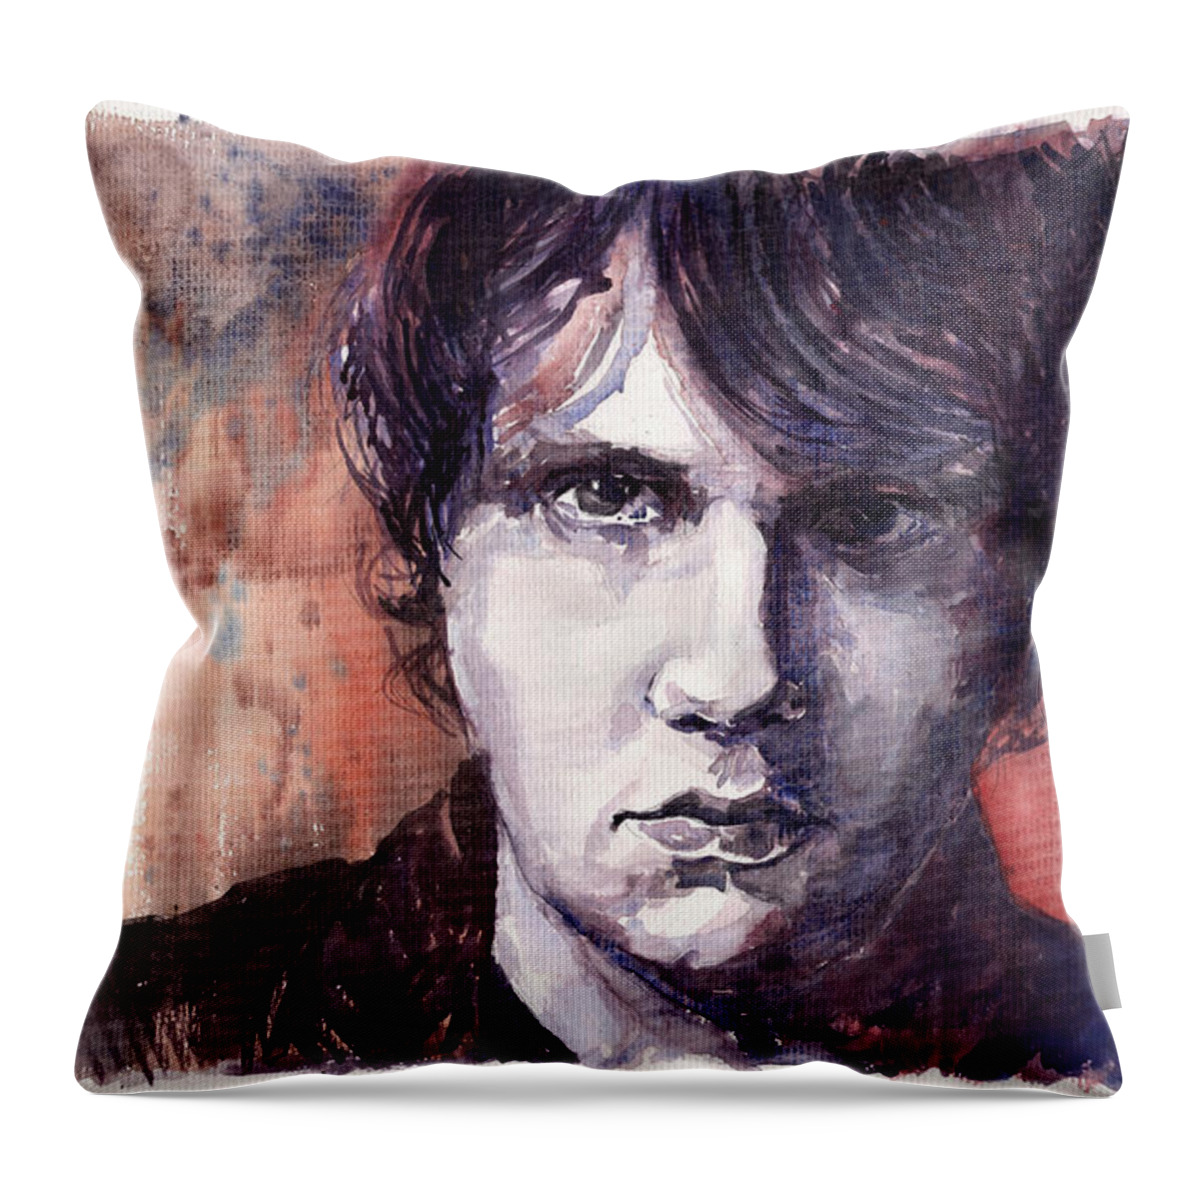 Jazz Throw Pillow featuring the painting Jazz Rock John Mayer by Yuriy Shevchuk